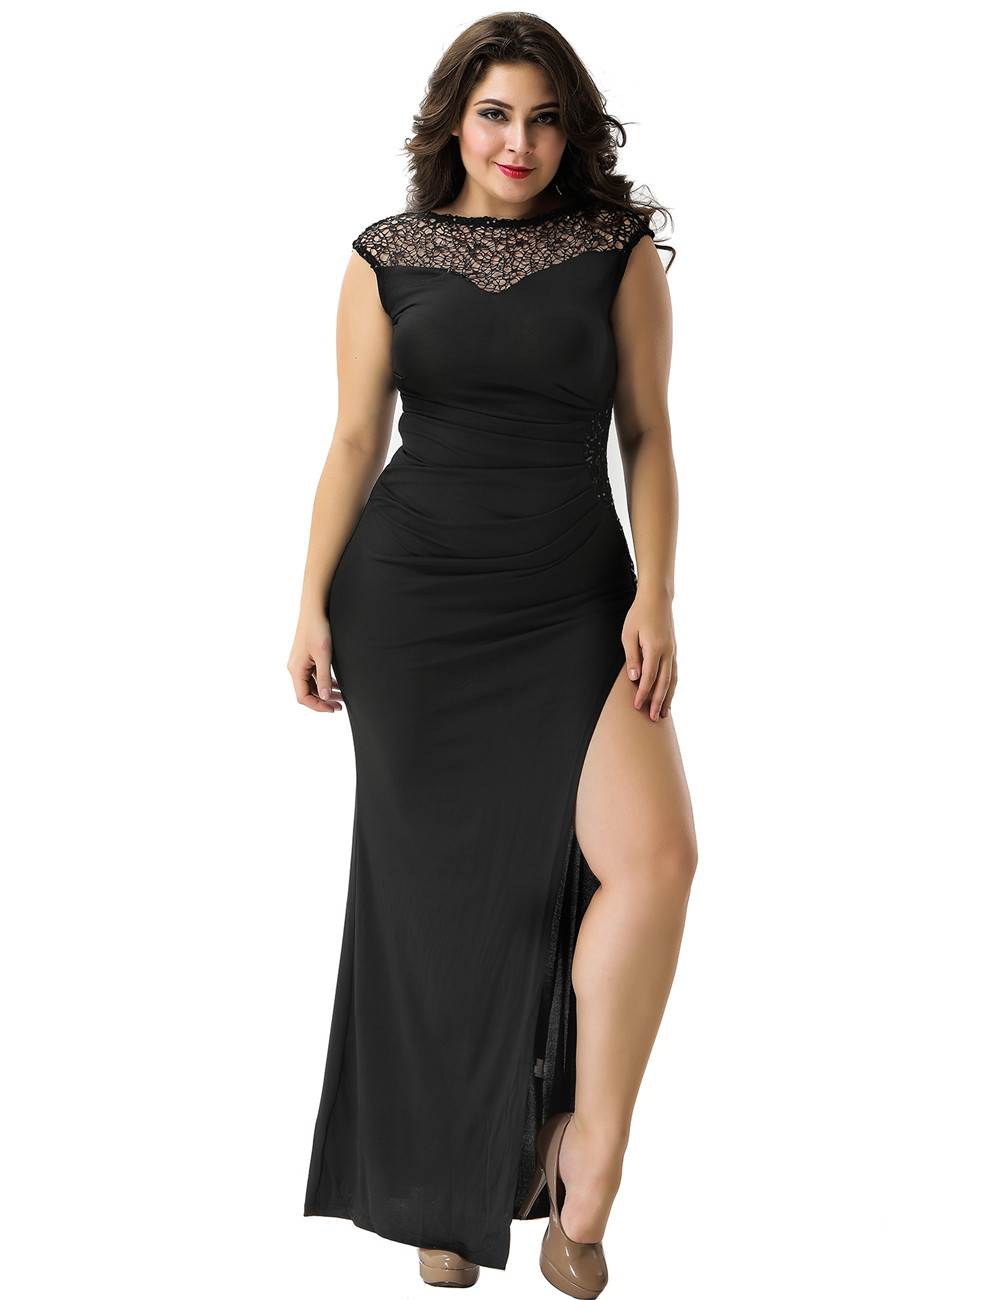 2016 New arrivals black lady long dress selling hot